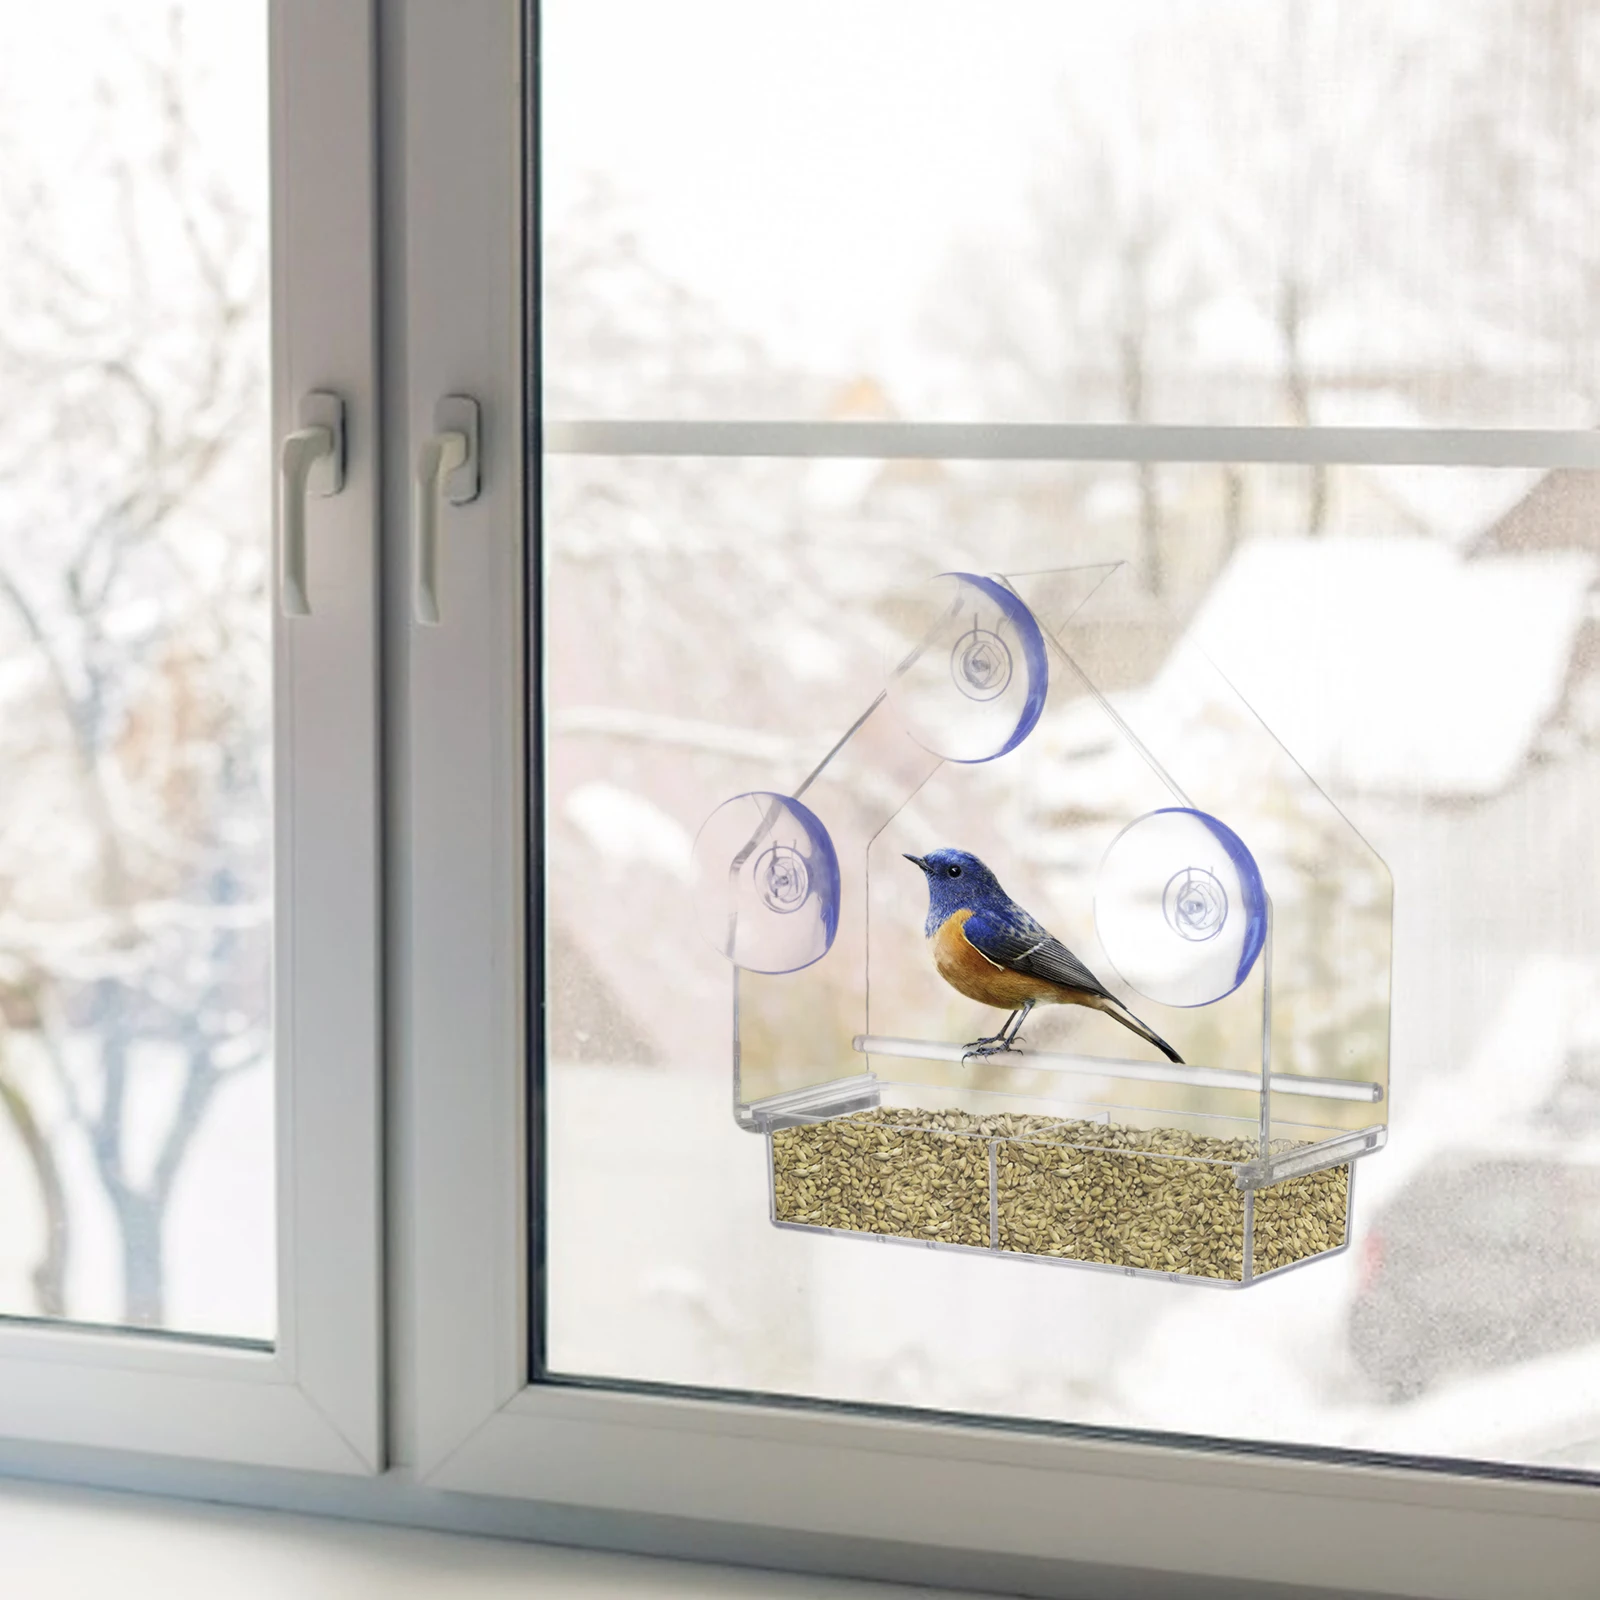 Window Bird Feeder House Shape, Transparent, Suction Cup Outdoor Birdfeeders